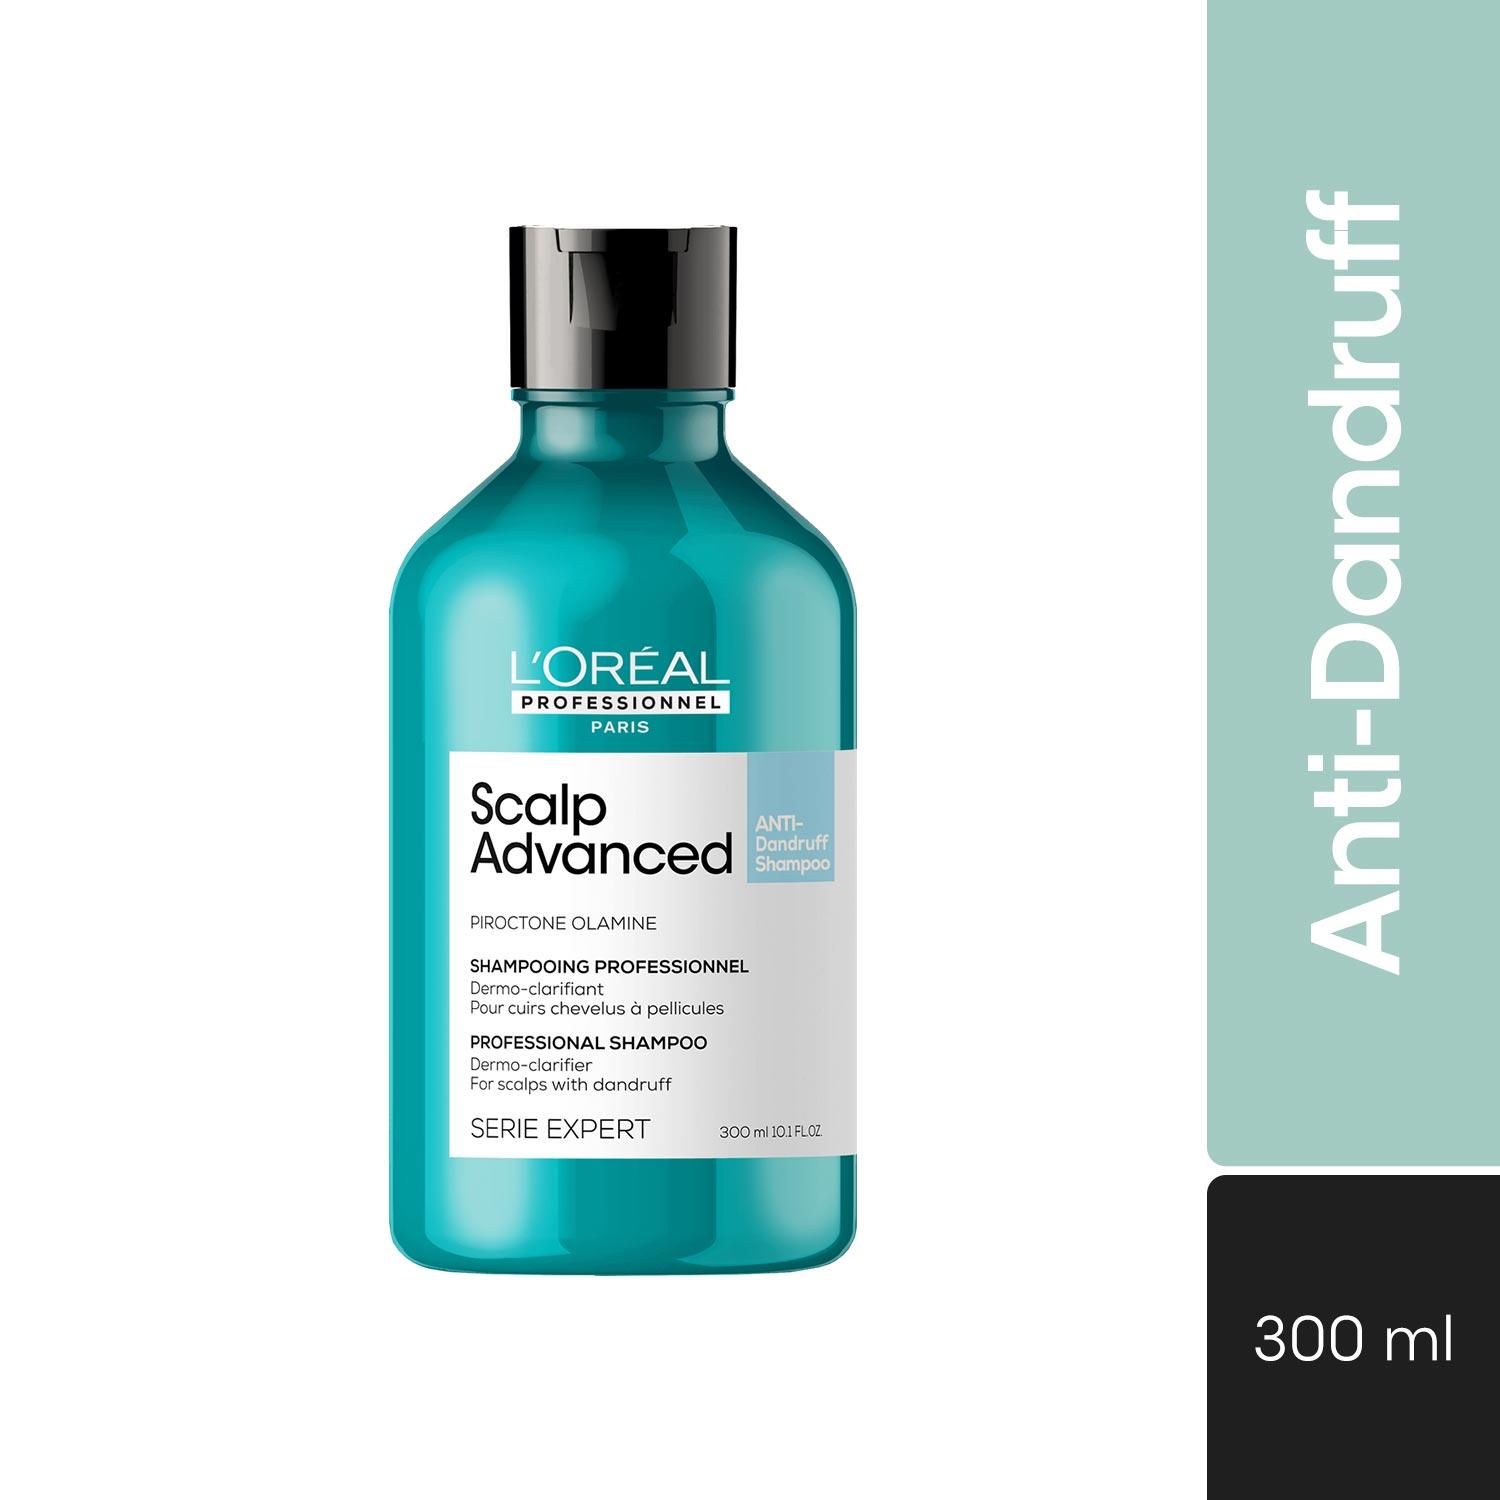 L'Oreal Professionnel | L'Oreal Professionnel Scalp Advanced Anti-Dandruff Dermo-Clarifier Shampoo (300ml)